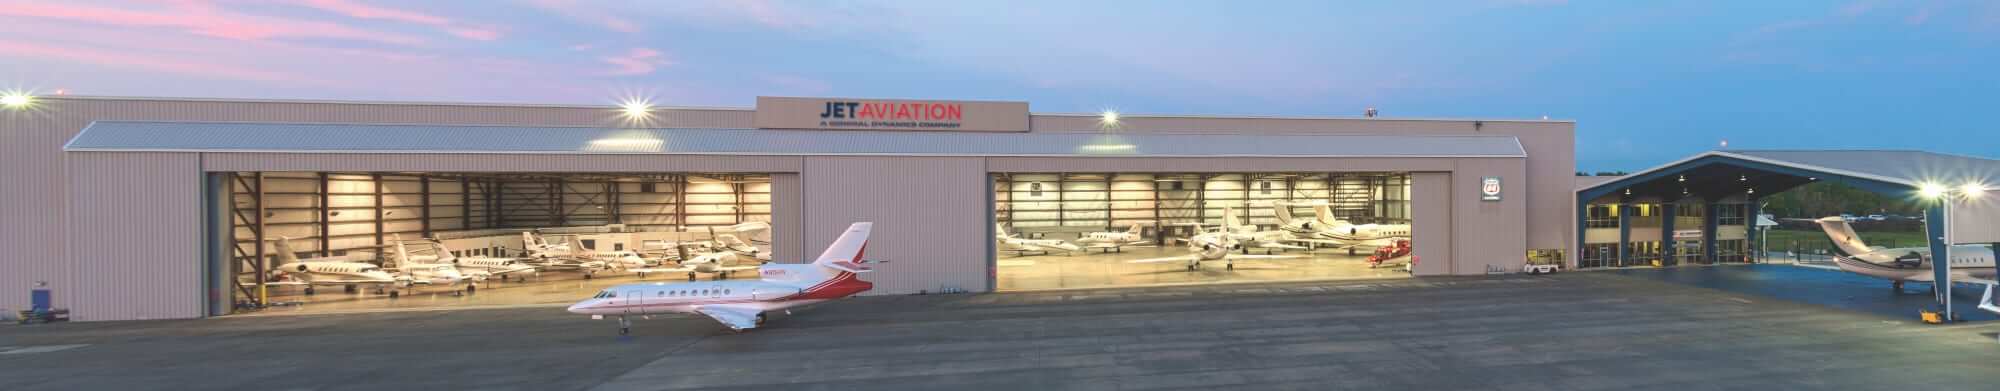 Jet Aviation – Houston hangar